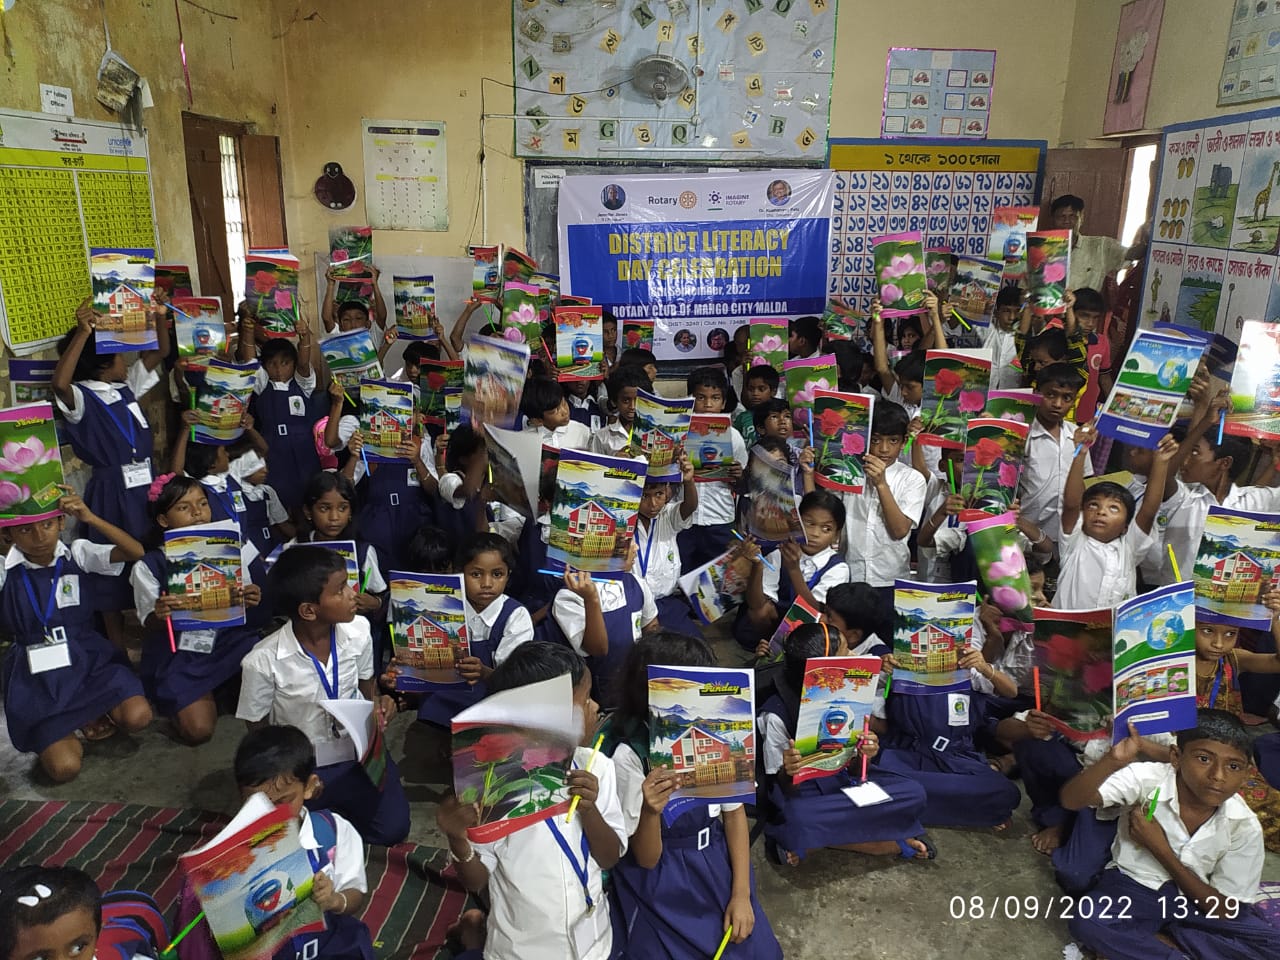 District Literacy Day